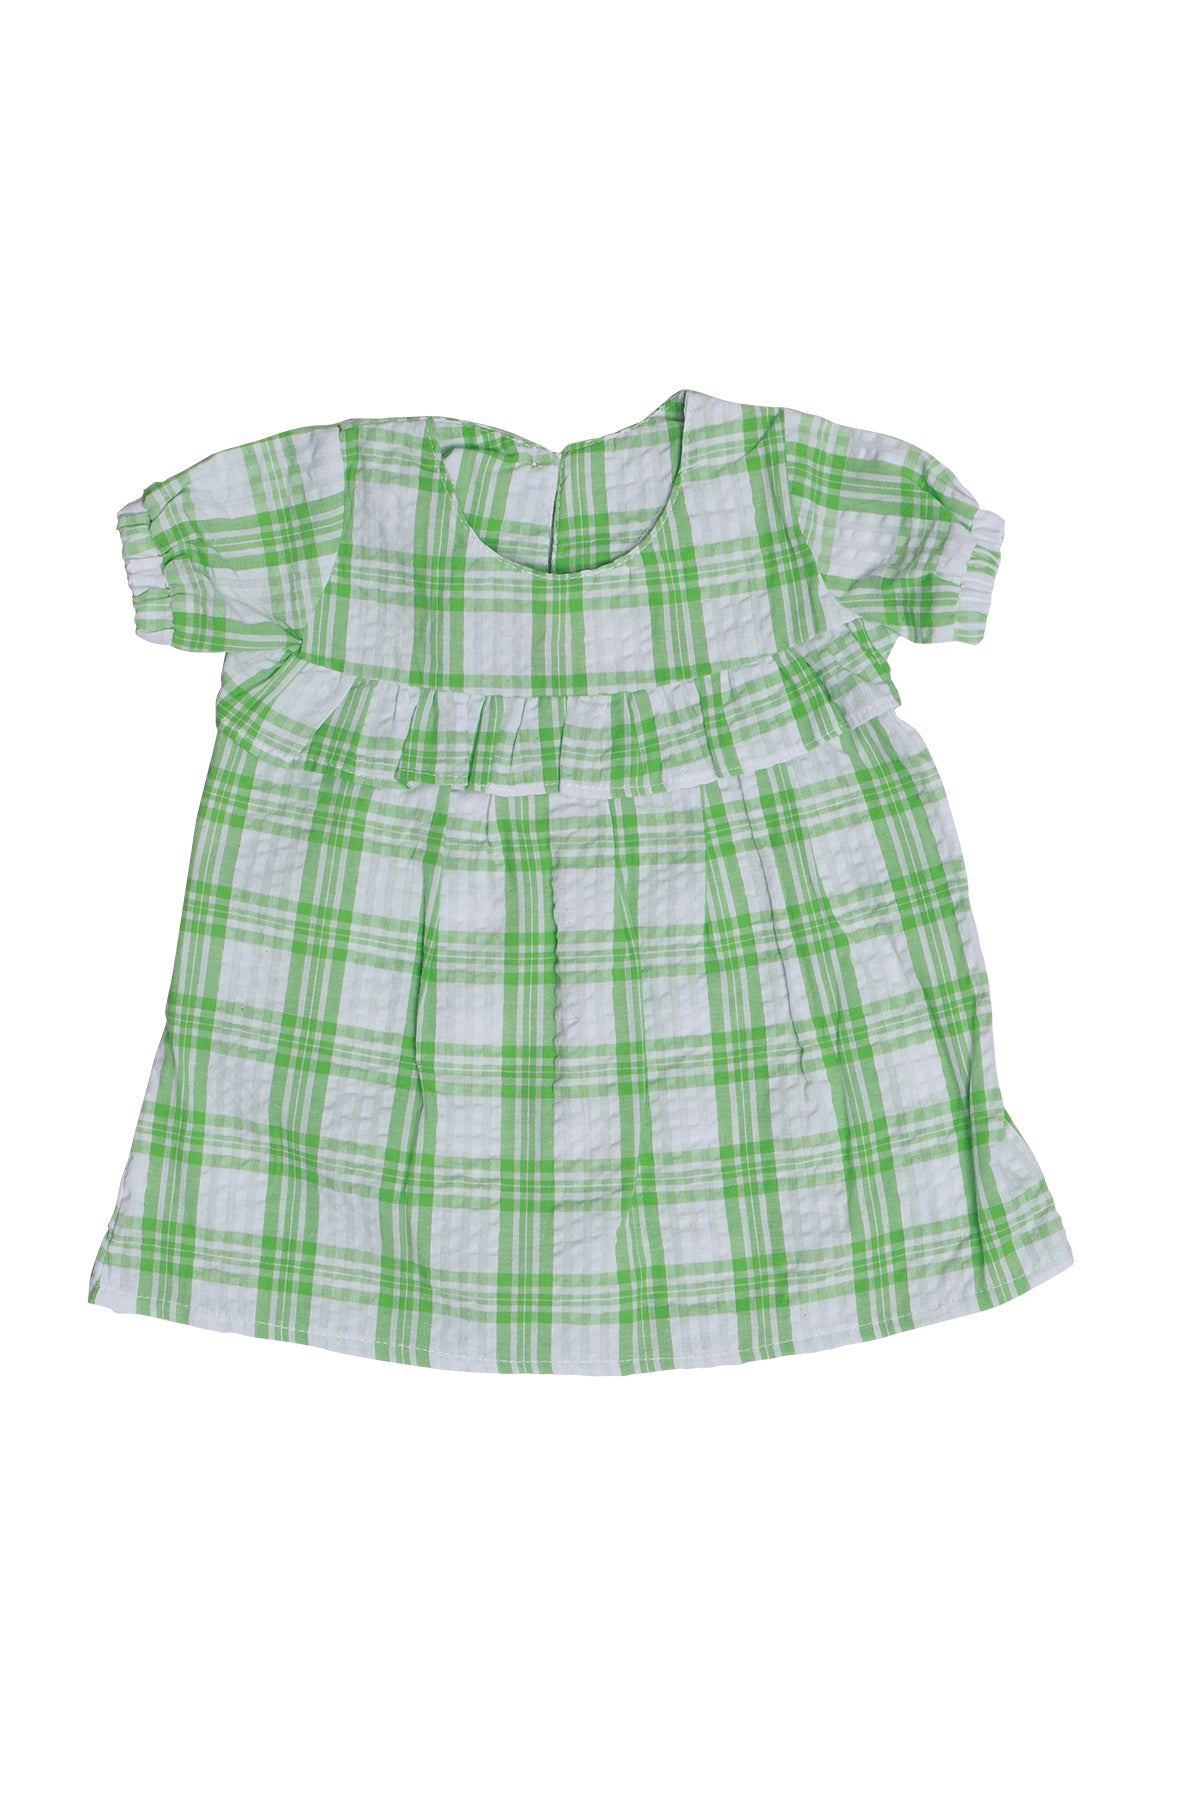 Ozone Baby Girls Short Sleeve Casual Dress